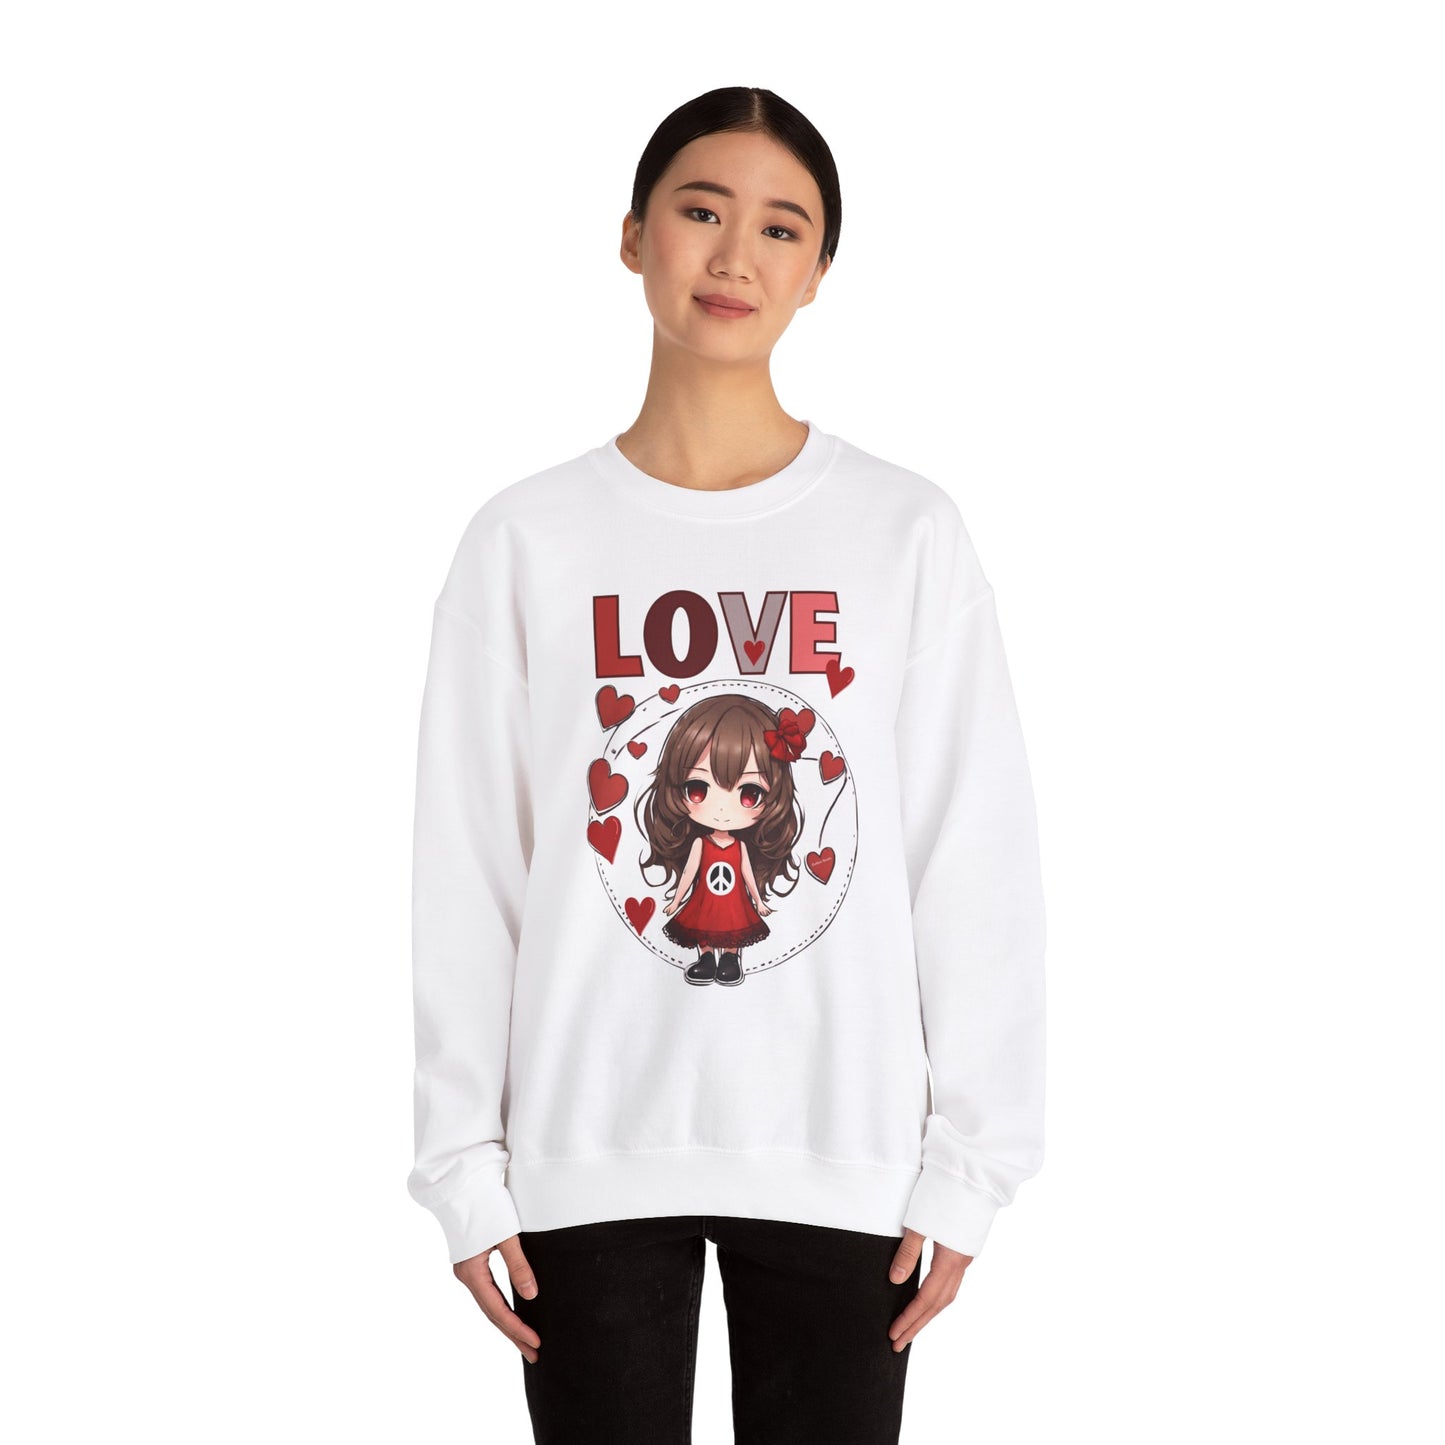 Valentine's love womens pullover crewneck Sweatshirt, Valentines Day gift outfit, teen sweater, Tween girl Sweatshirt, gifts for her, friend